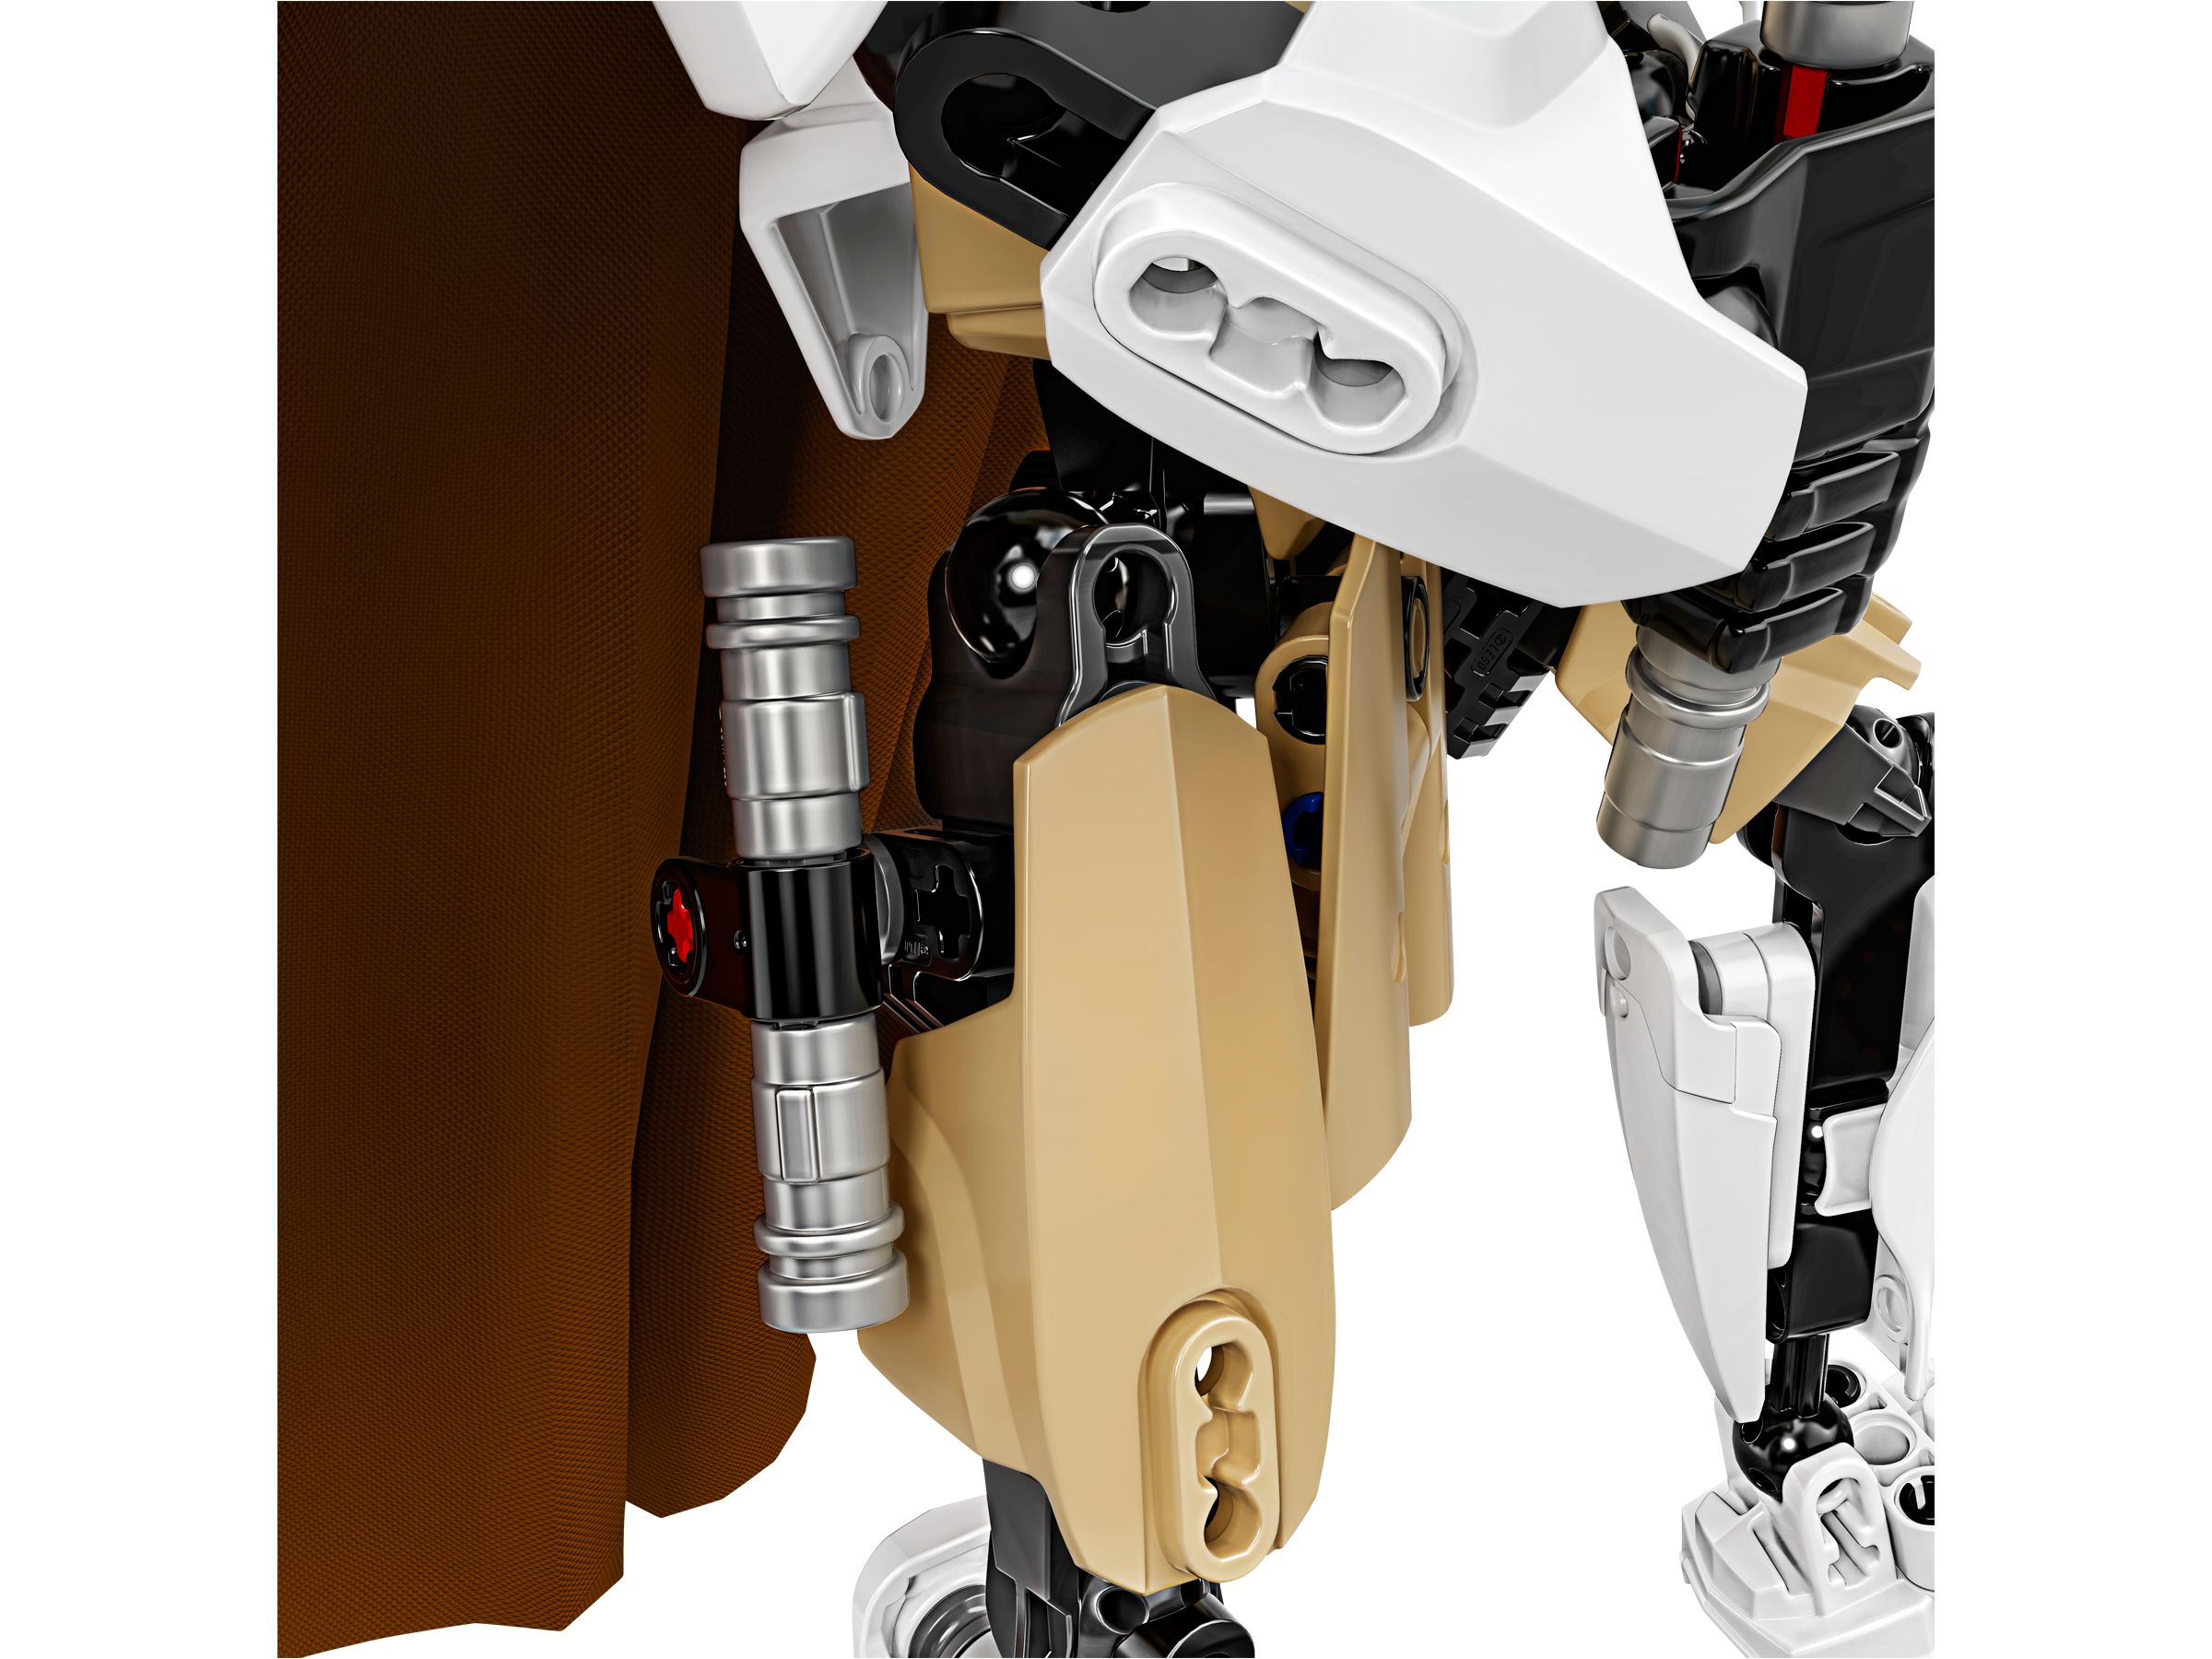 LEGO Star Wars Buildable Figures 75109 Obi-Wan Kenobi™ LEGO_75109_alt3.jpg